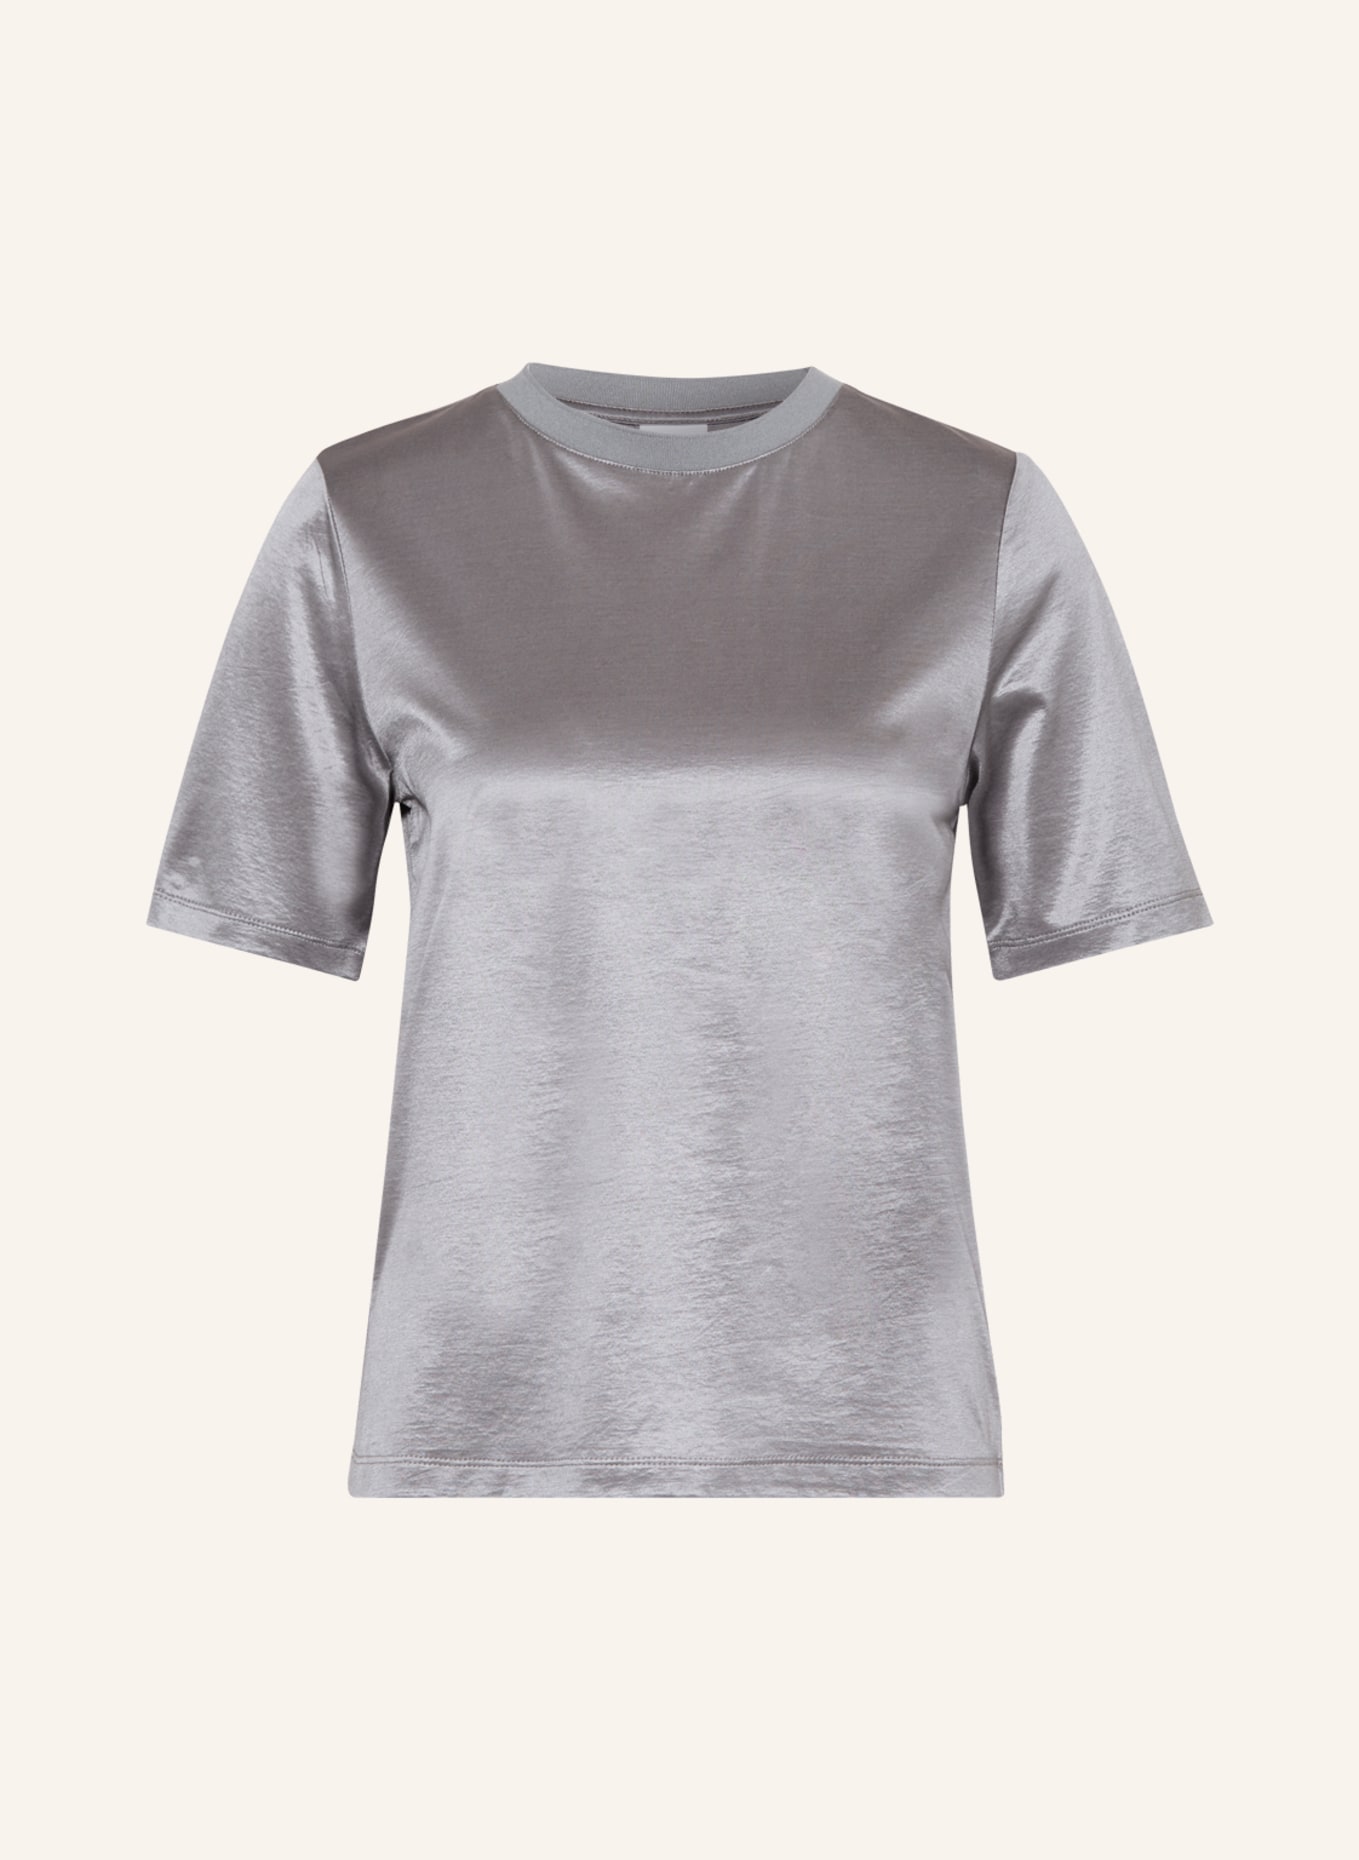 Satin LABEL BLACK gray in s.Oliver T-shirt